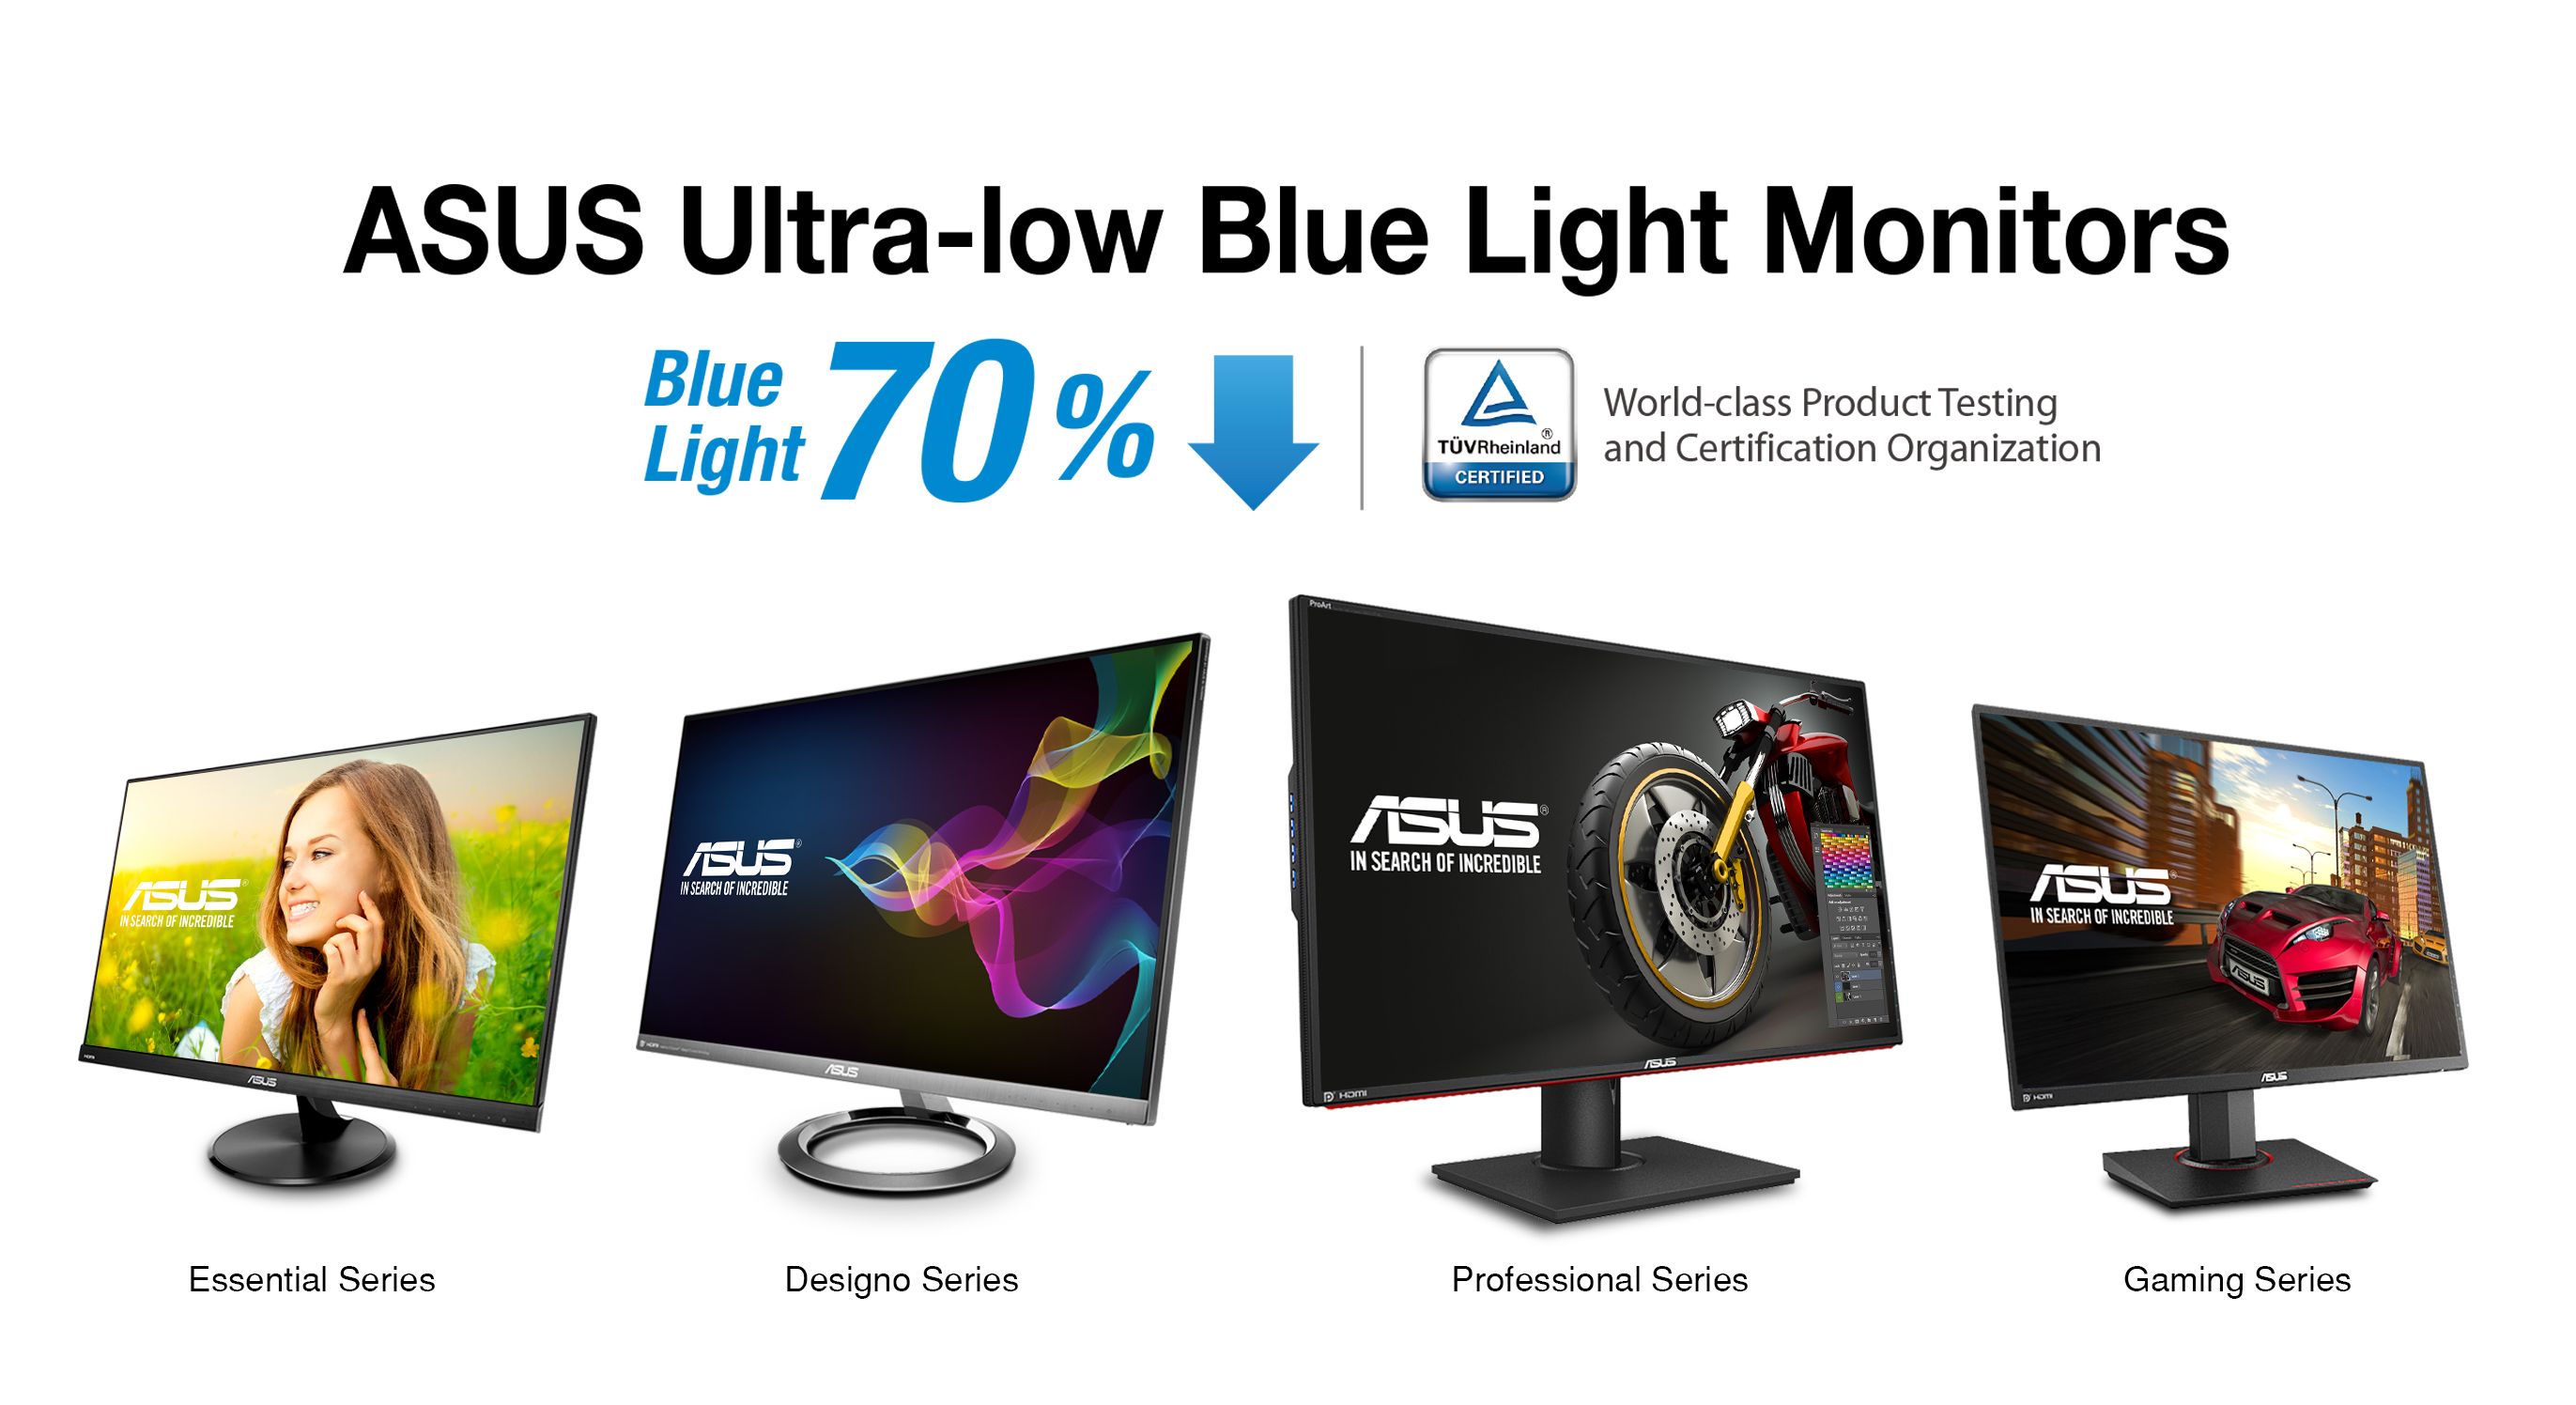 ASUS Low Blue Light Monitors